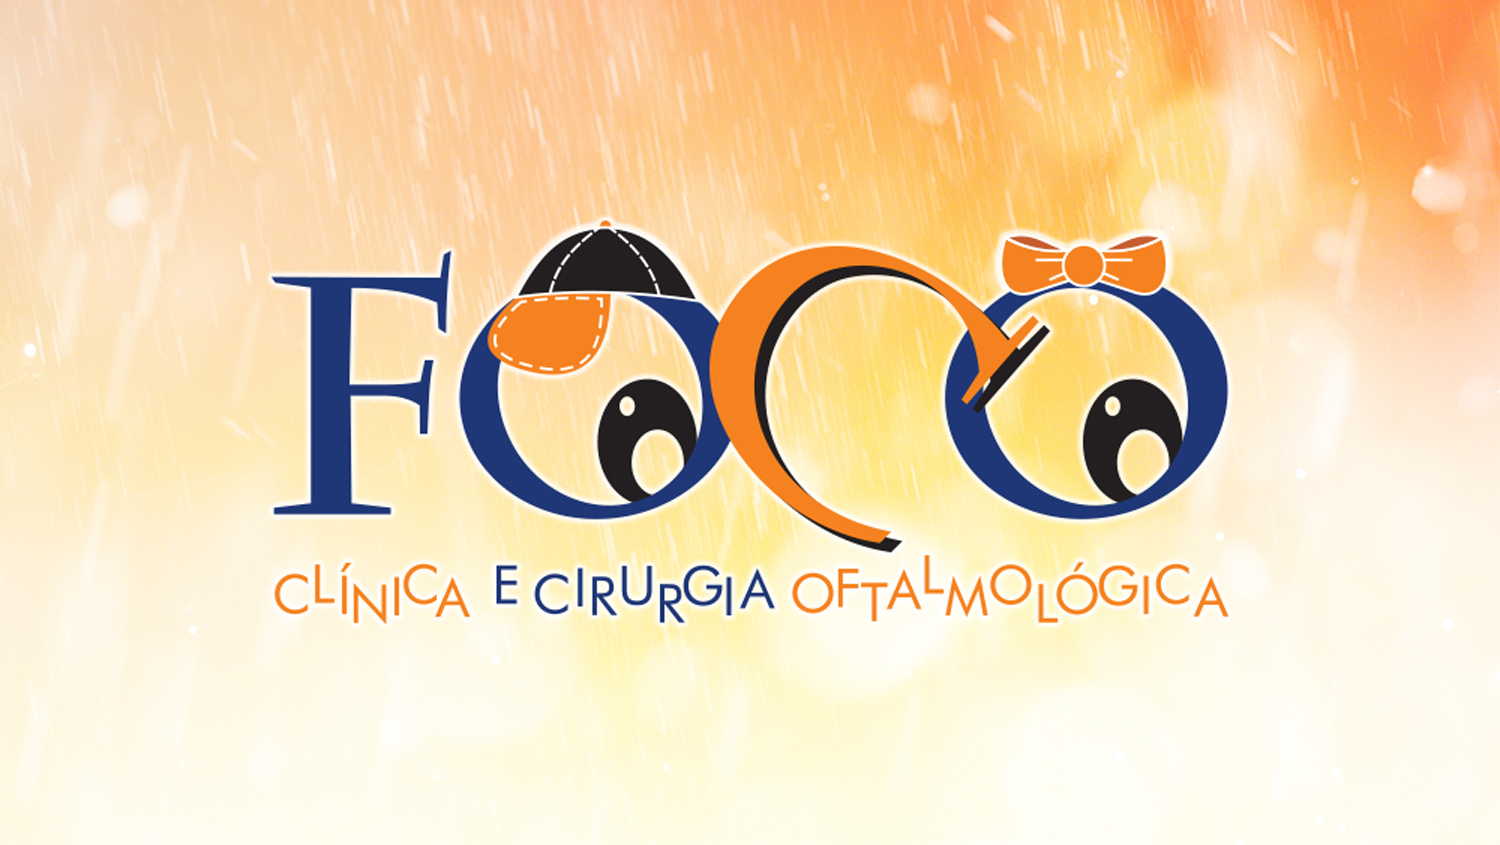 Alexakis Propaganda Rio Preto – Logotipo Foco - Alexakis